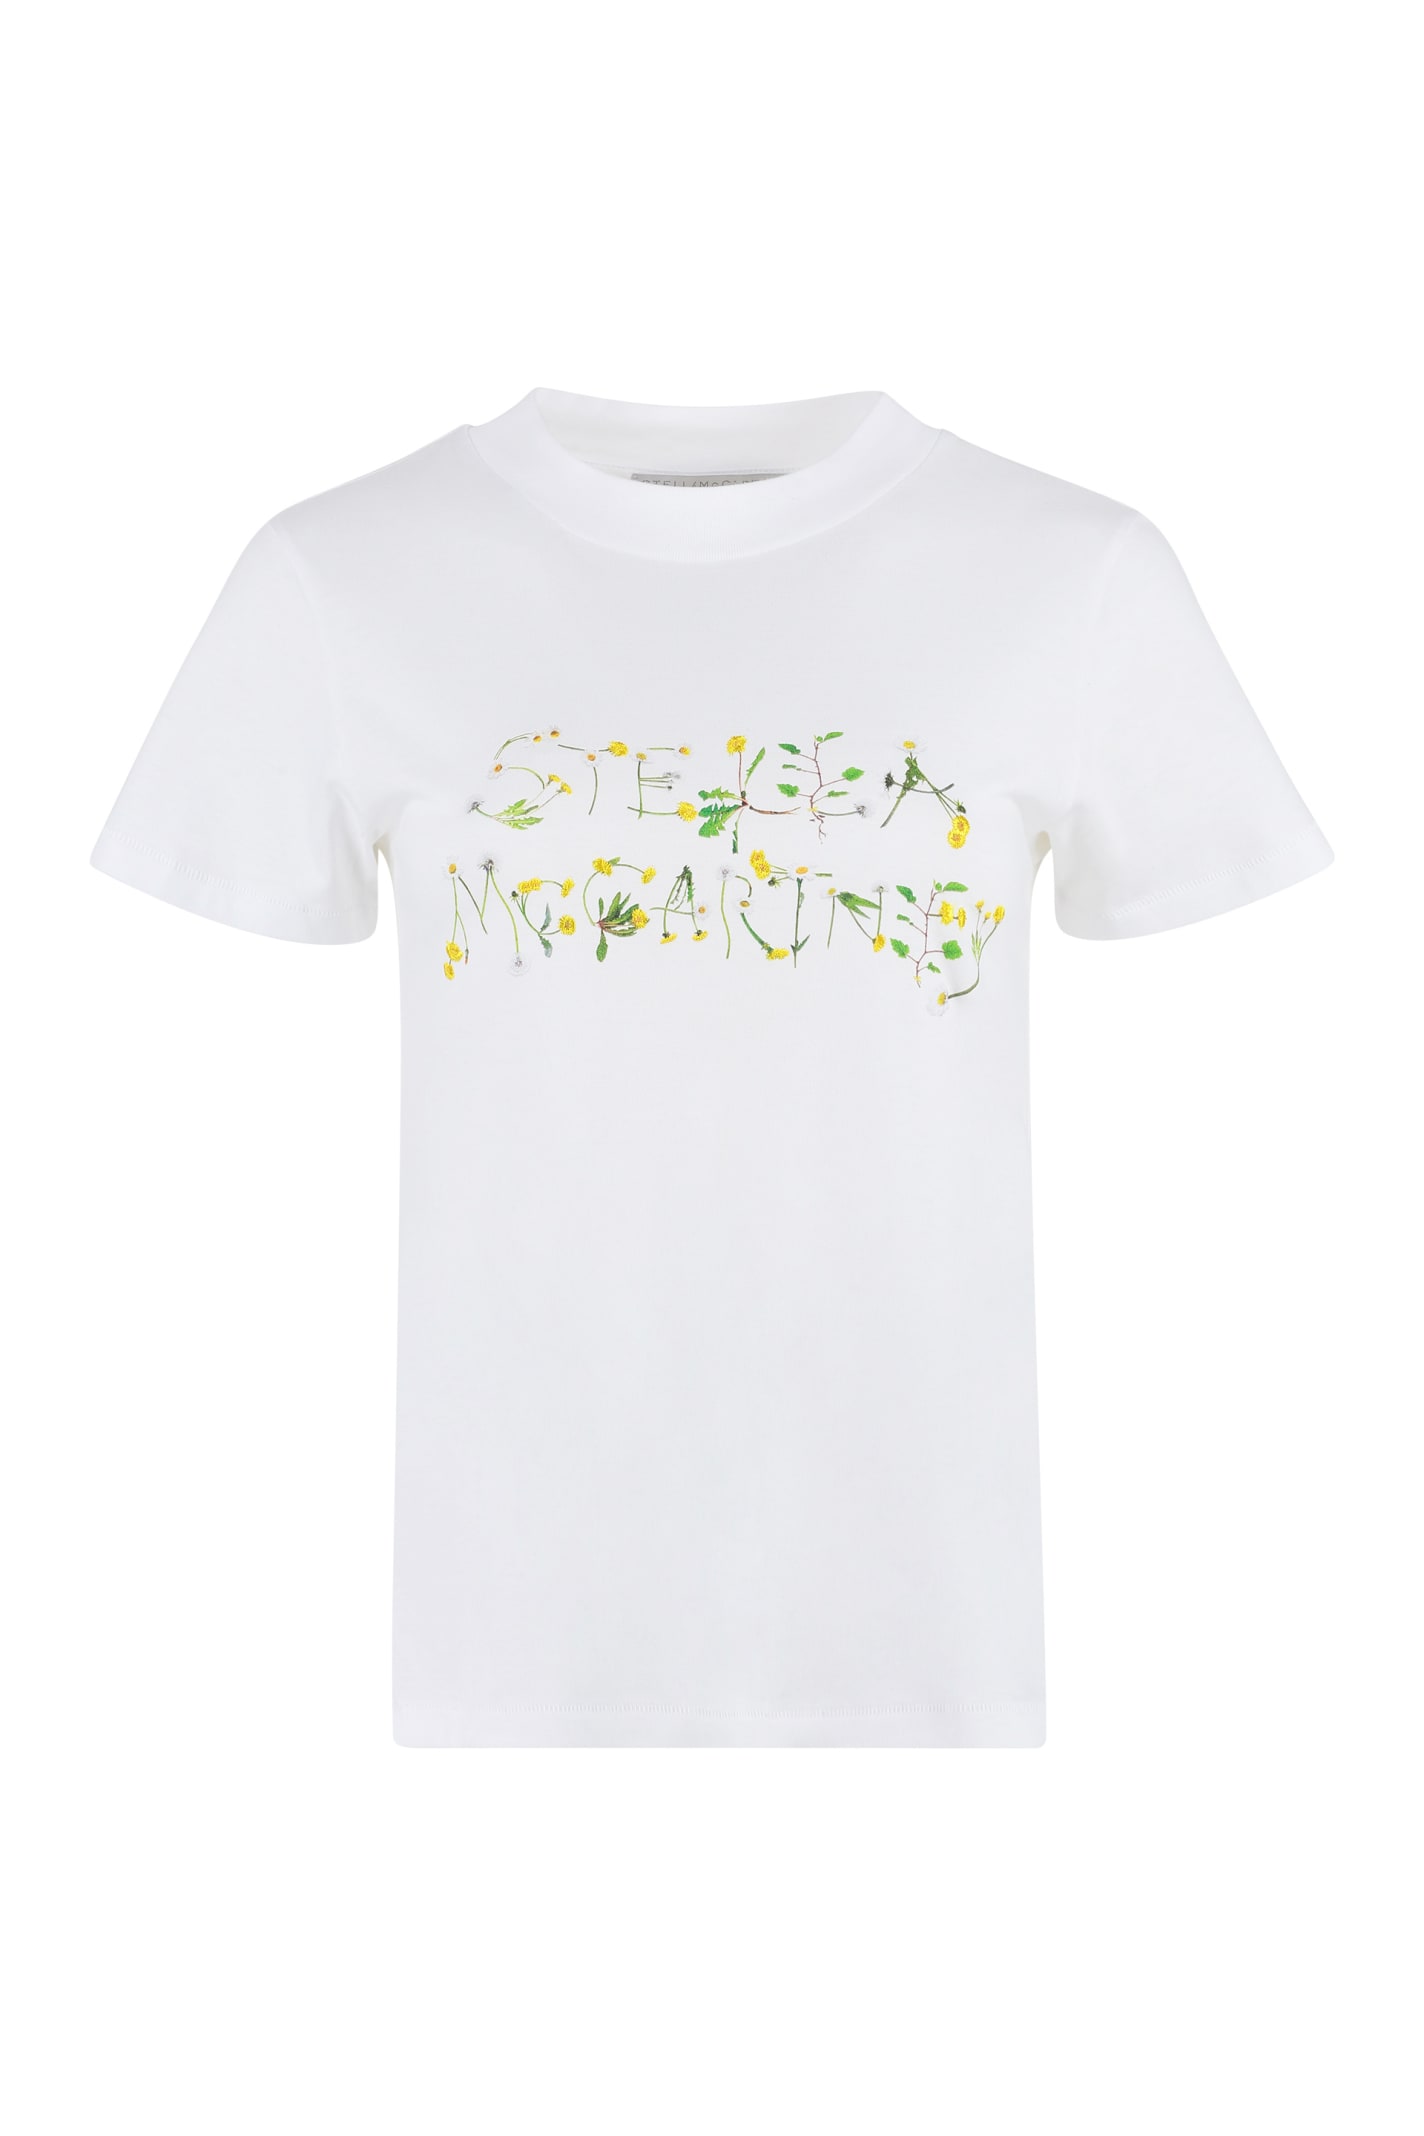 Stella McCartney Logo Cotton T-shirt